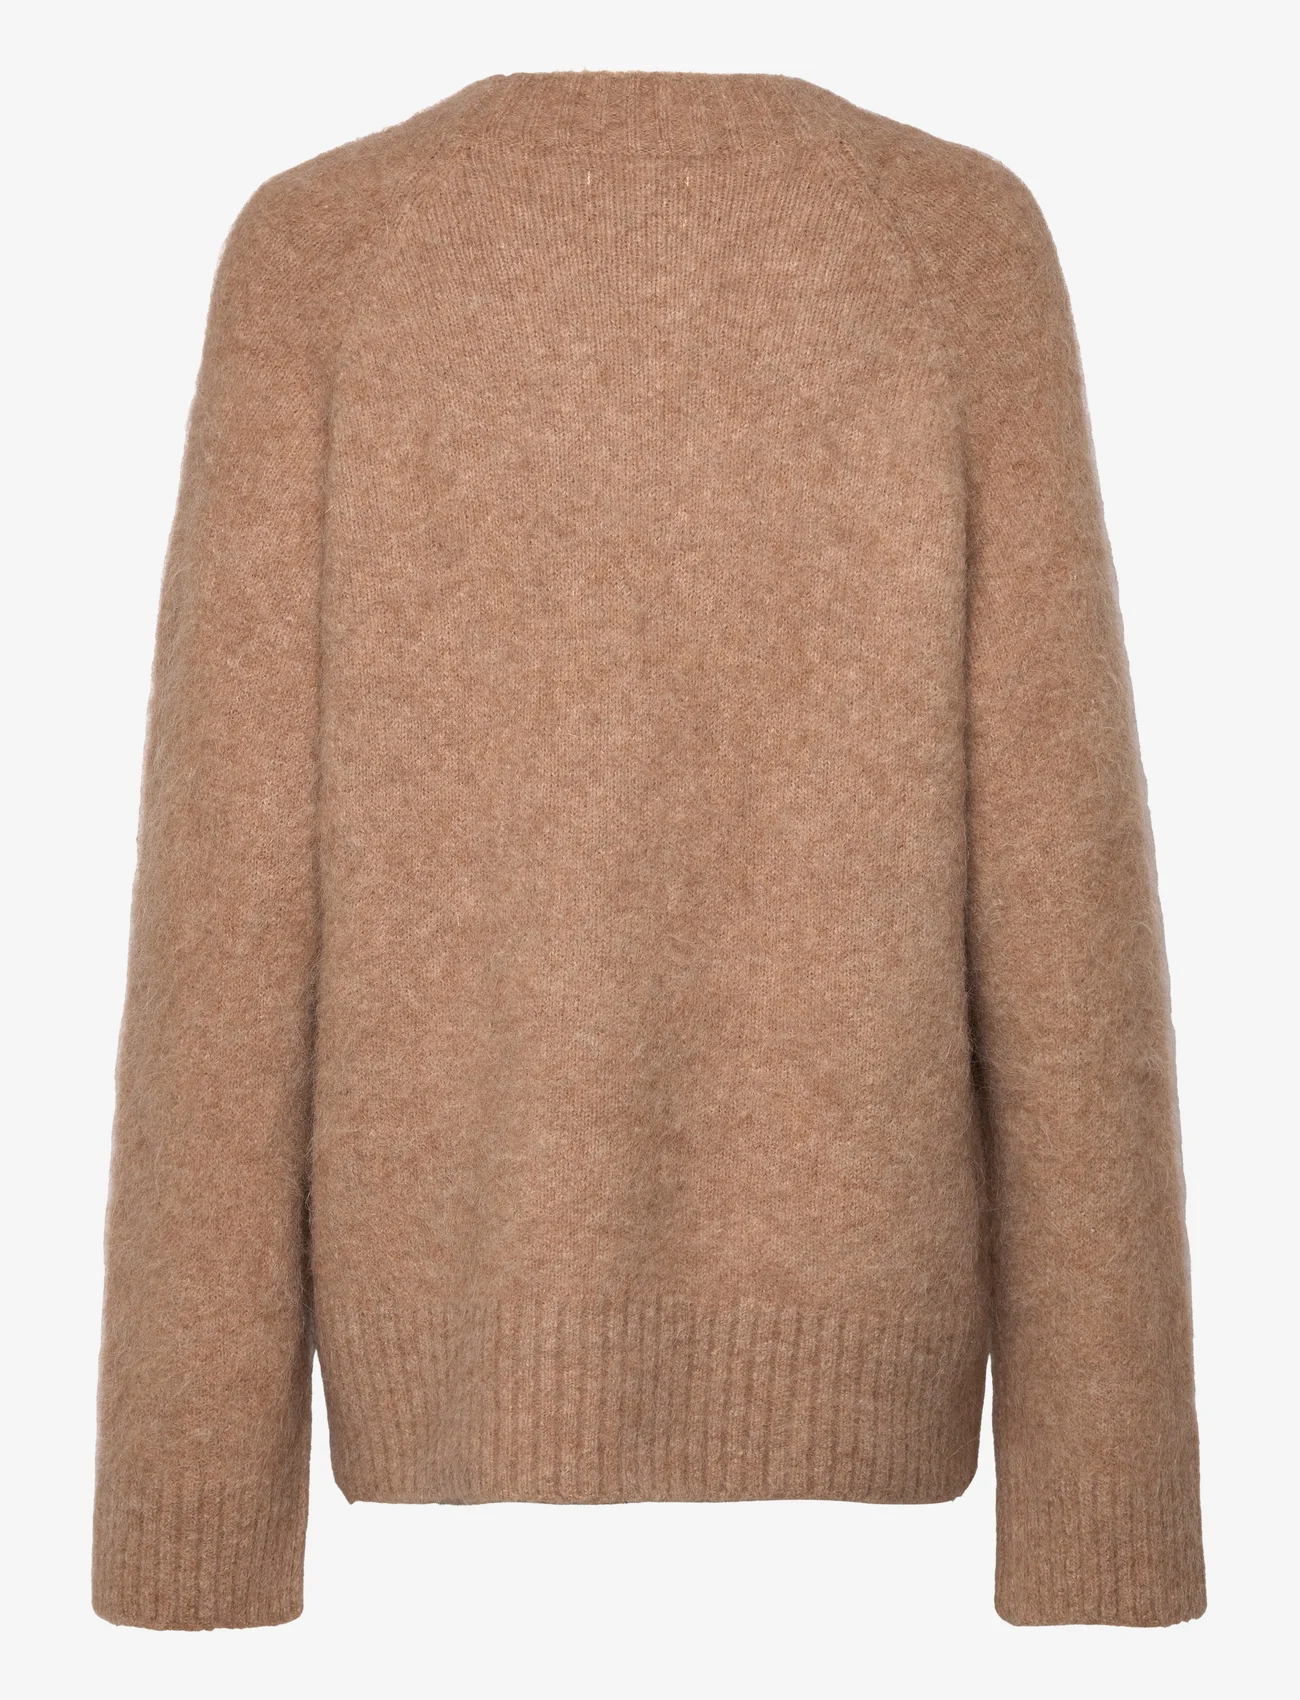 HOLZWEILER - Fure Fluffy Knit Sweater - pullover - beige - 1